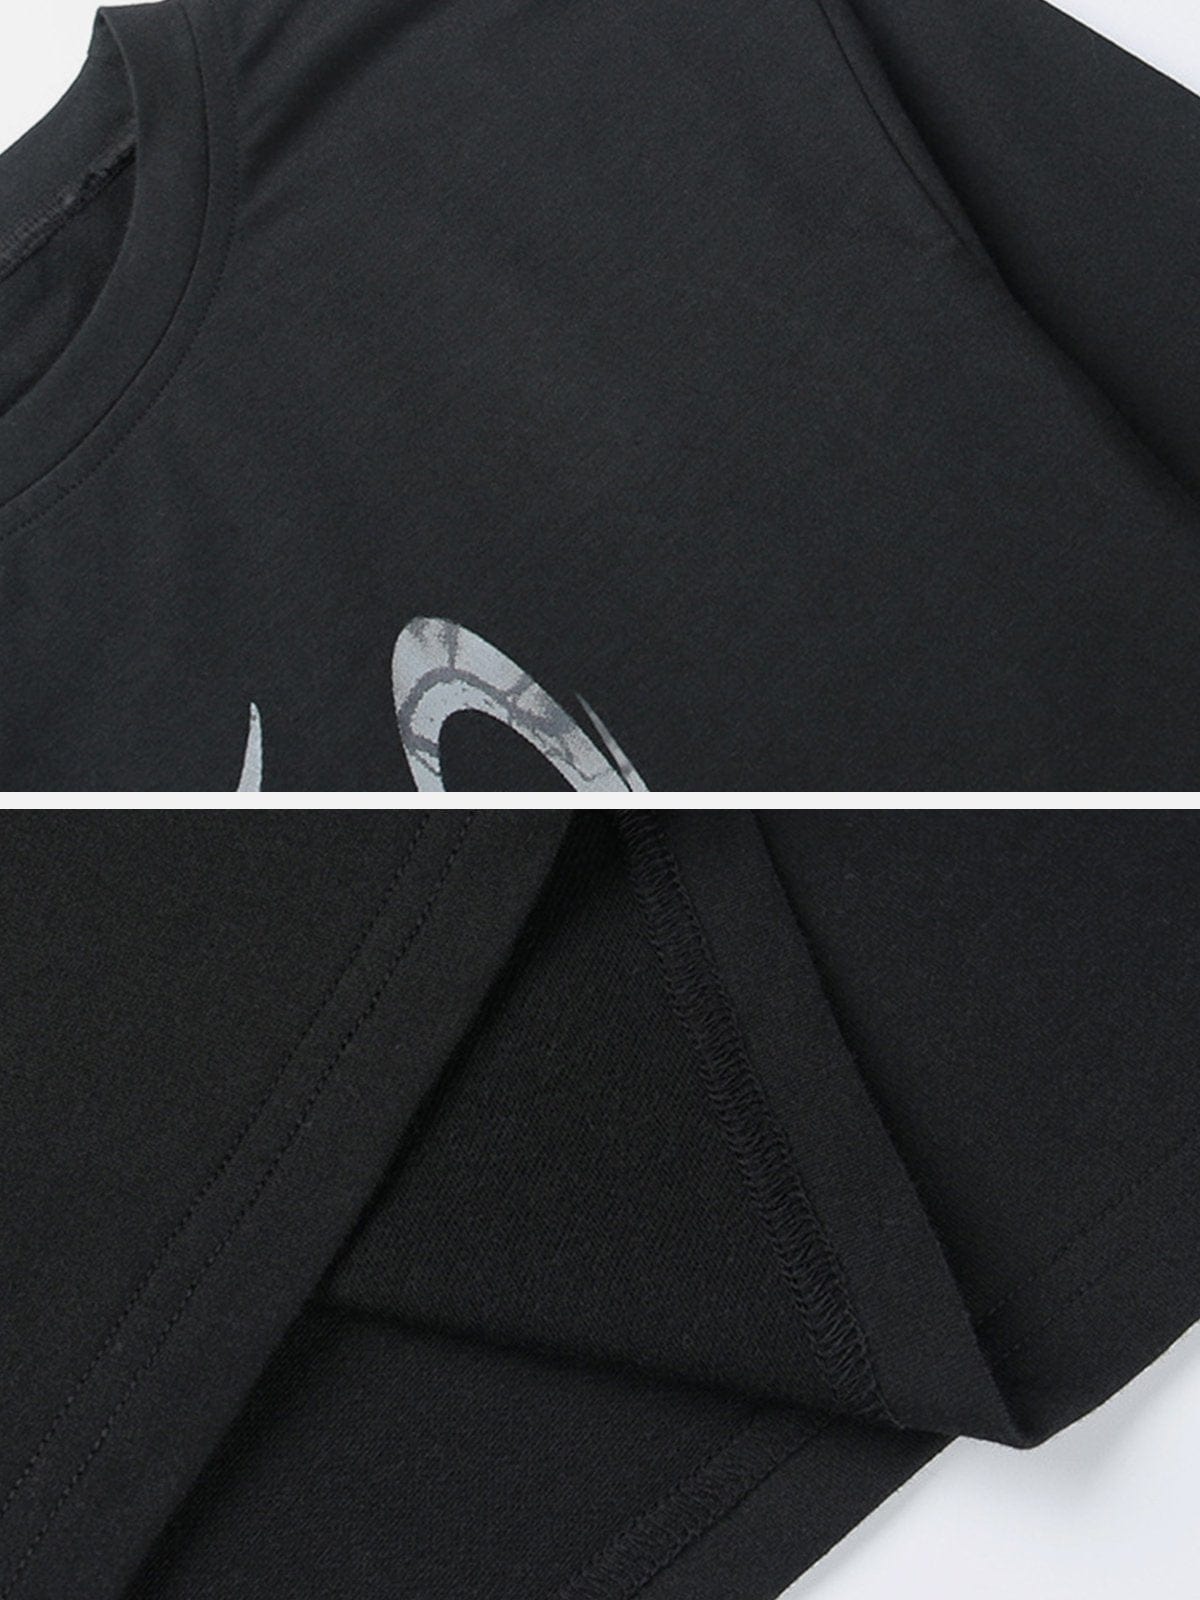 Dark Metal Buckle Long Sleeve T Shirt Streetwear Brand Techwear Combat Tactical YUGEN THEORY